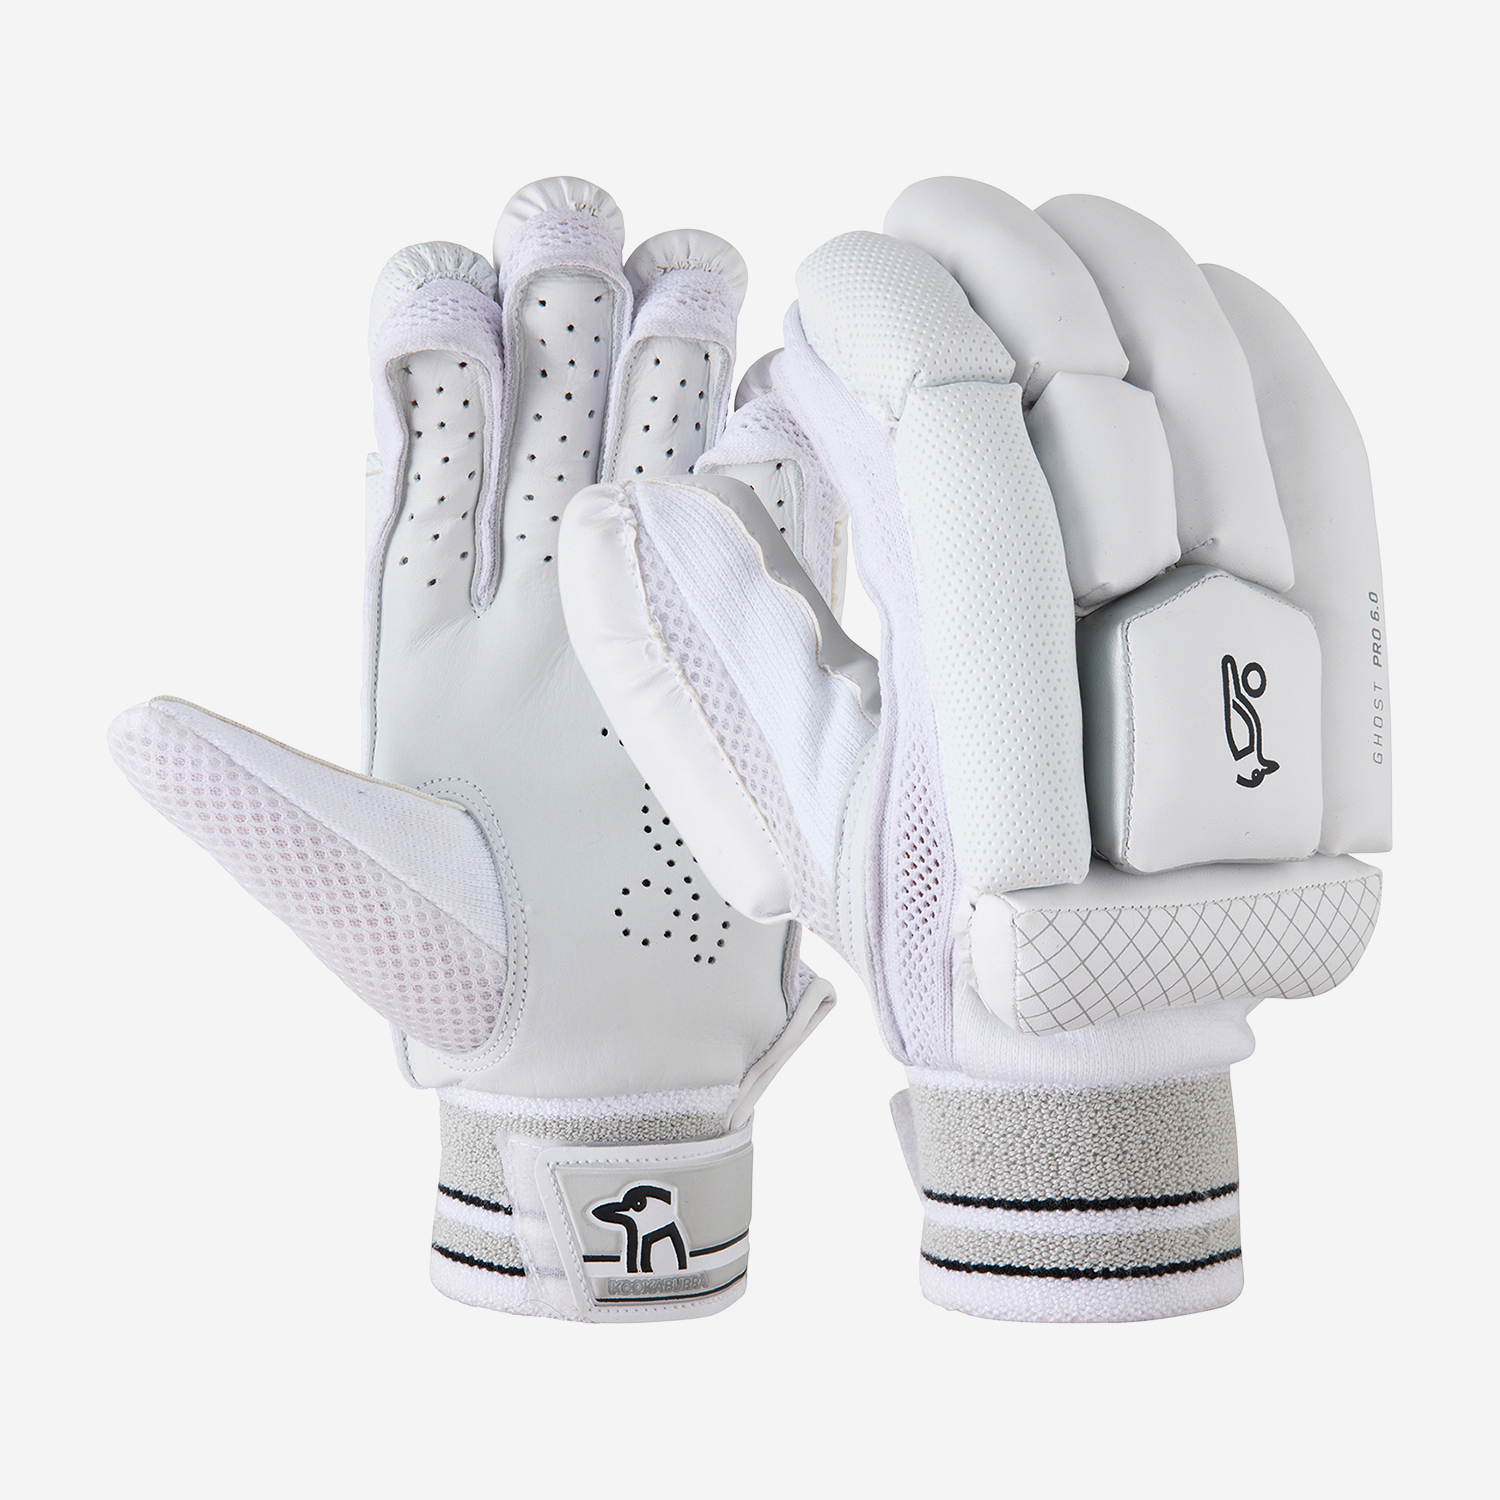 Ghost Pro 6.0 Batting Gloves